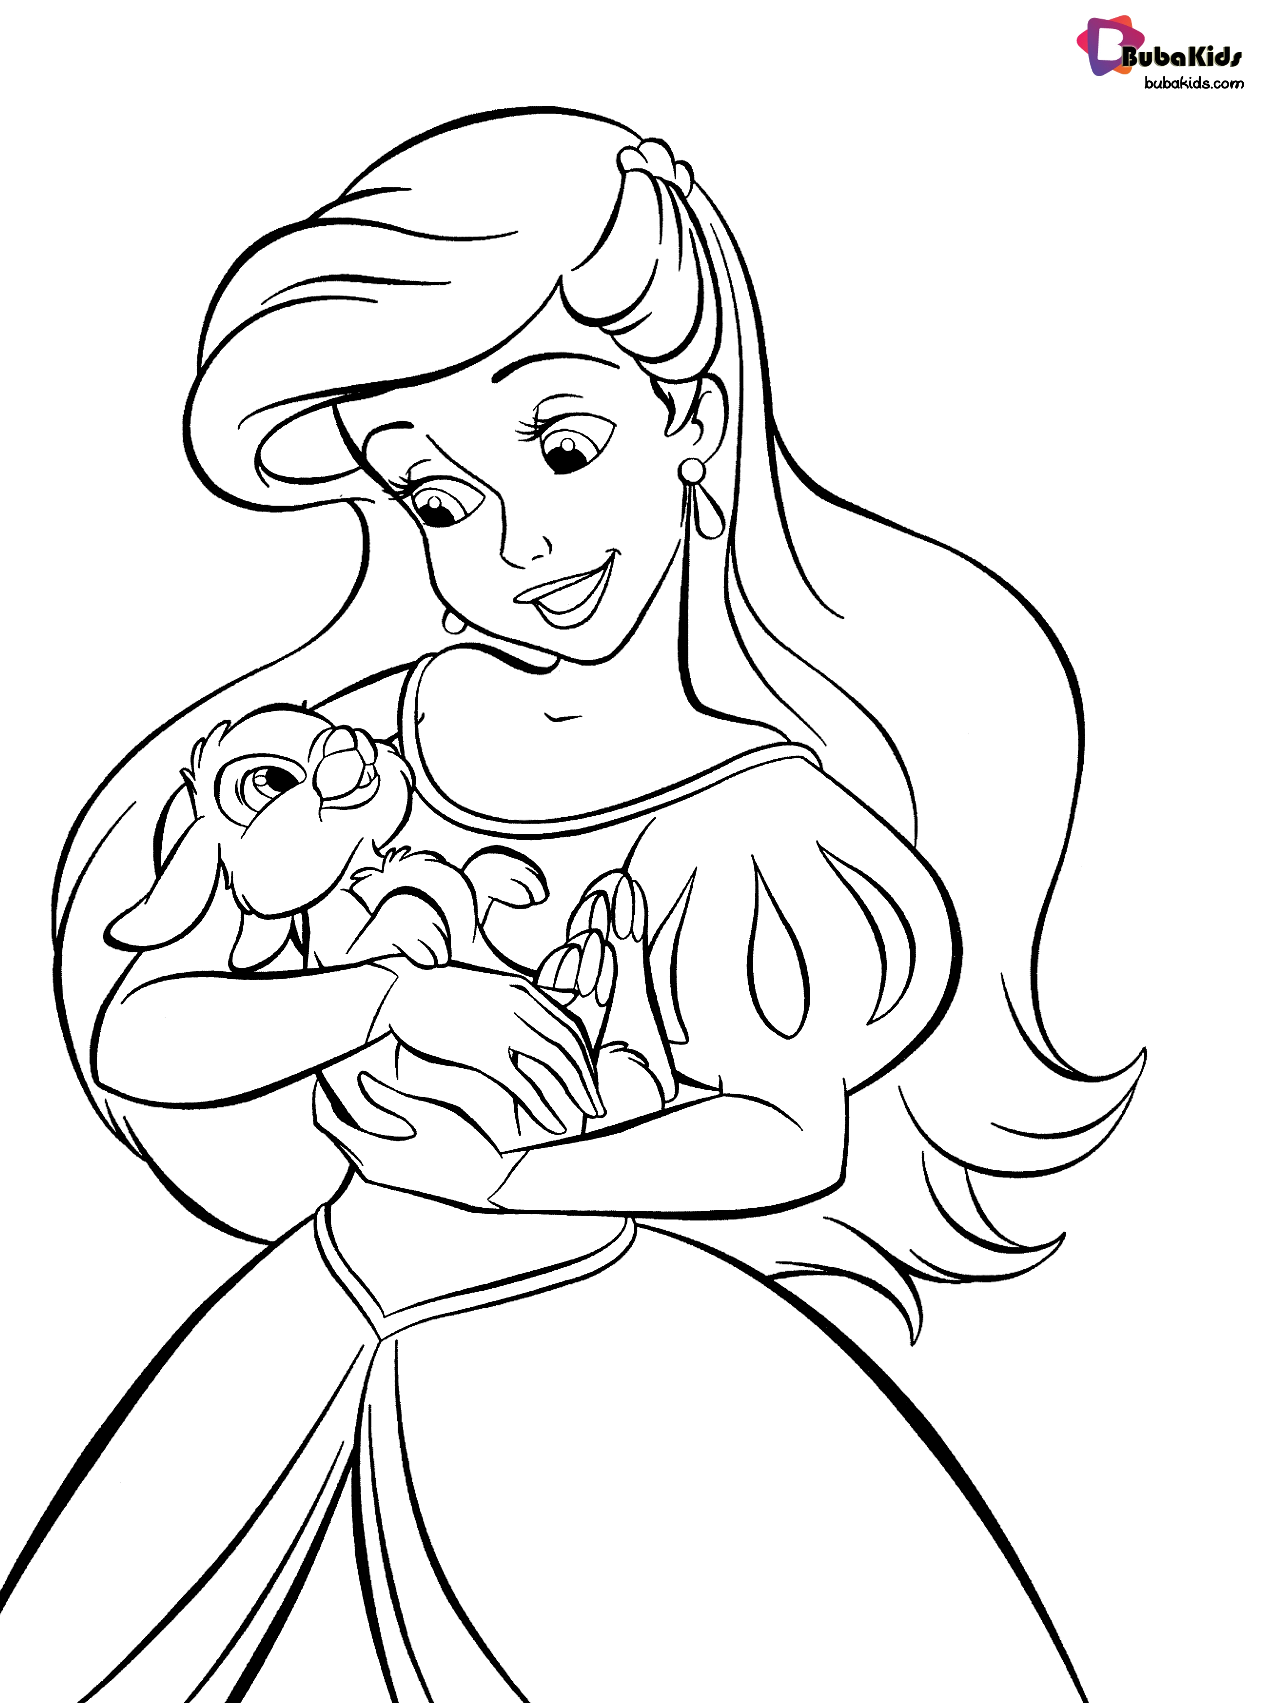 Princess Ariel Disney’s Little Mermaid coloring page Wallpaper